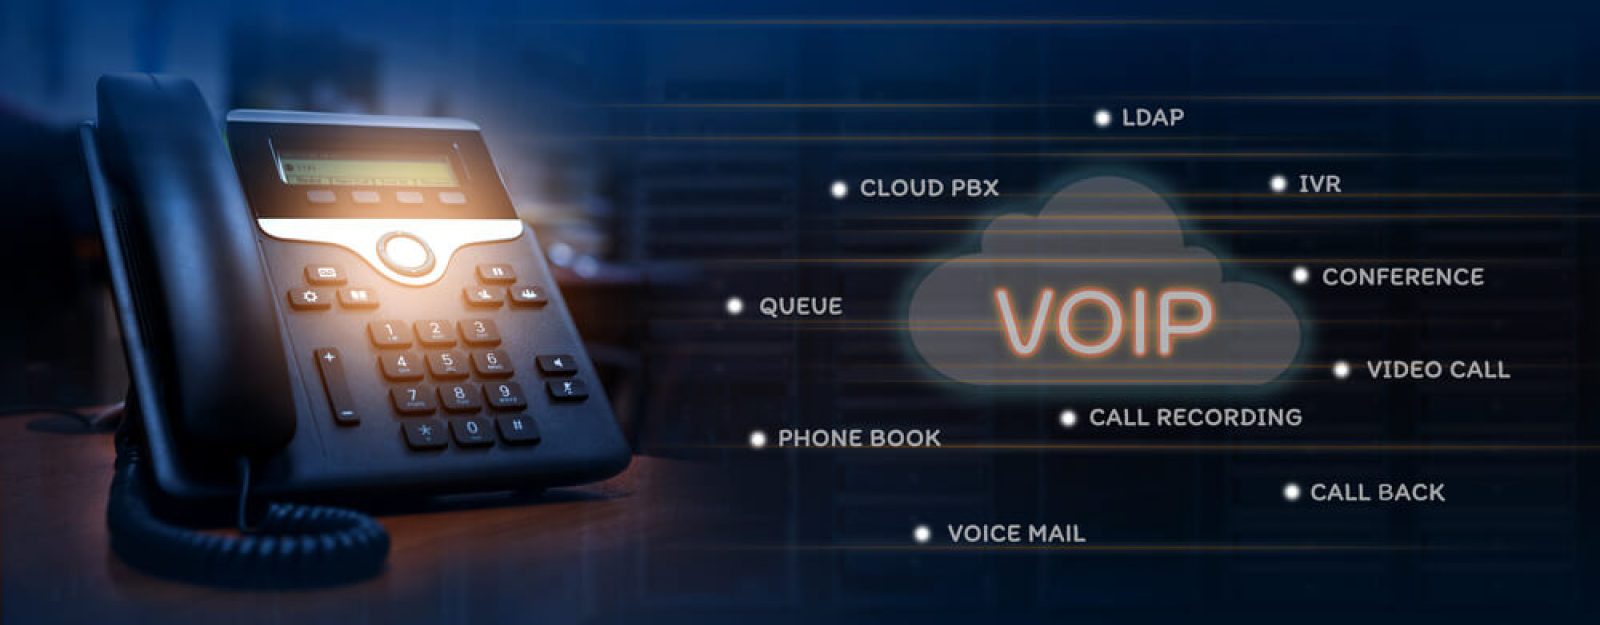 VoIP PBX System